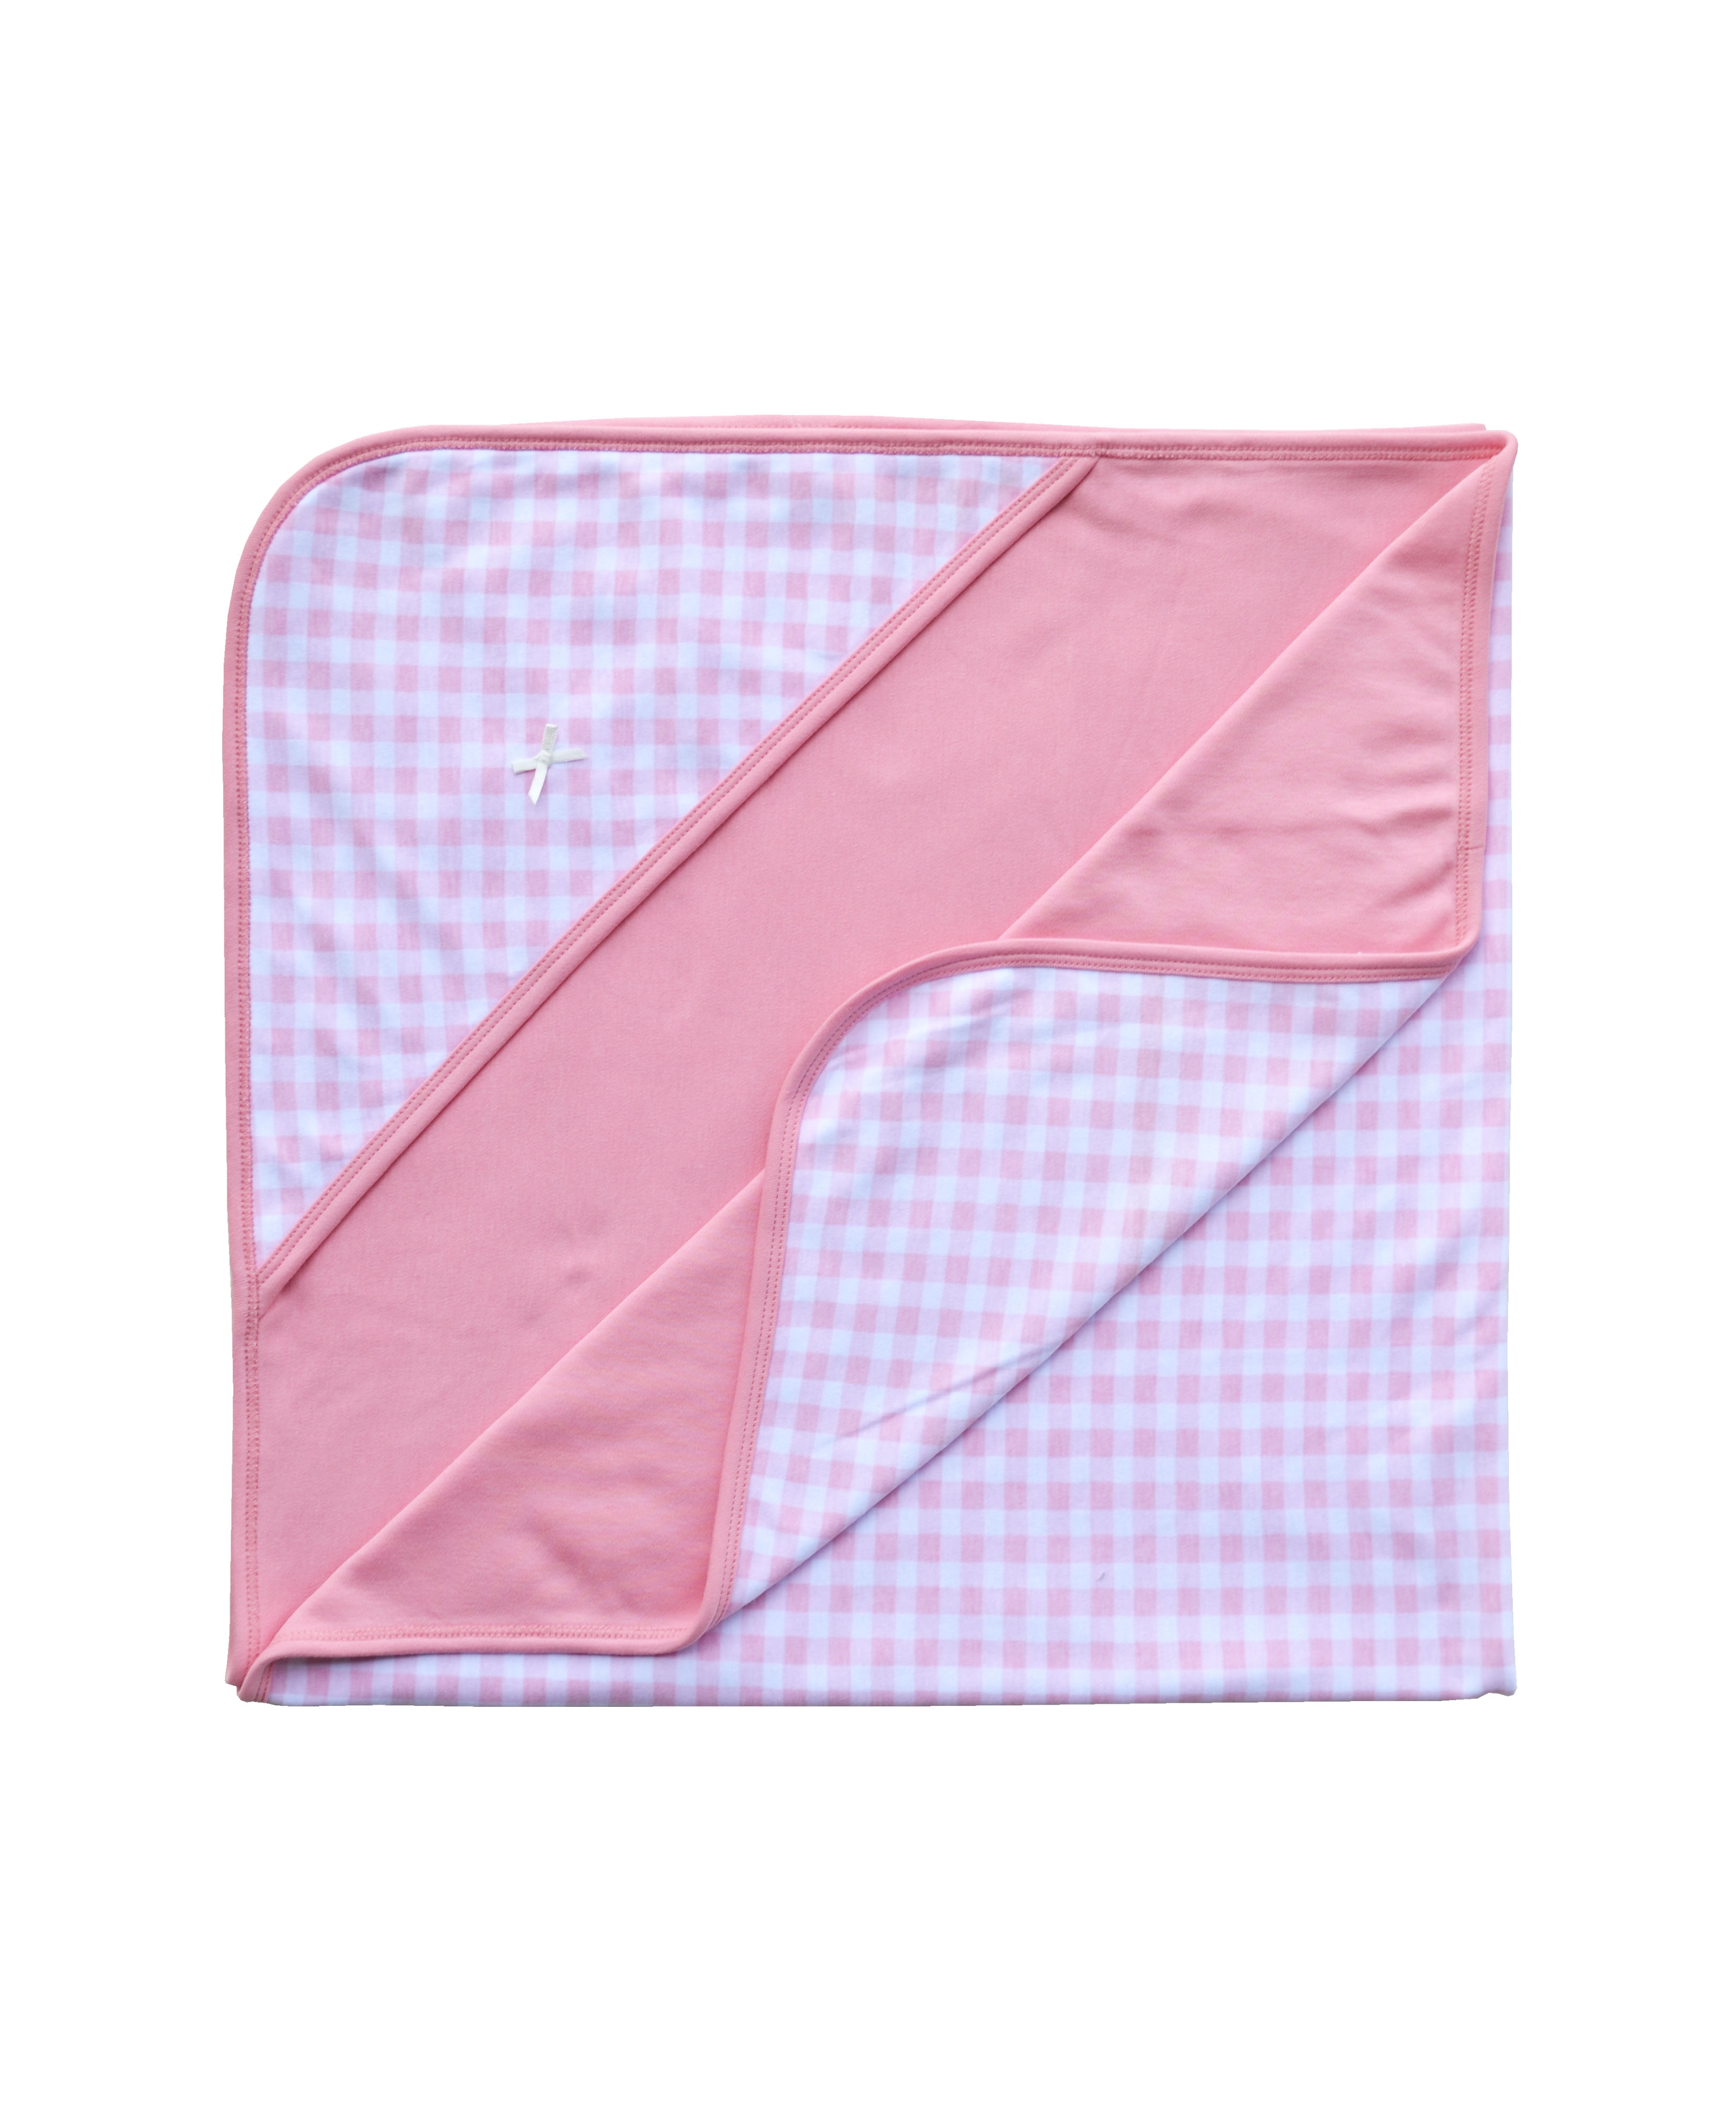 Pink Checks Reversible Baby Blanket with Hoody(100% Cotton Interlock)